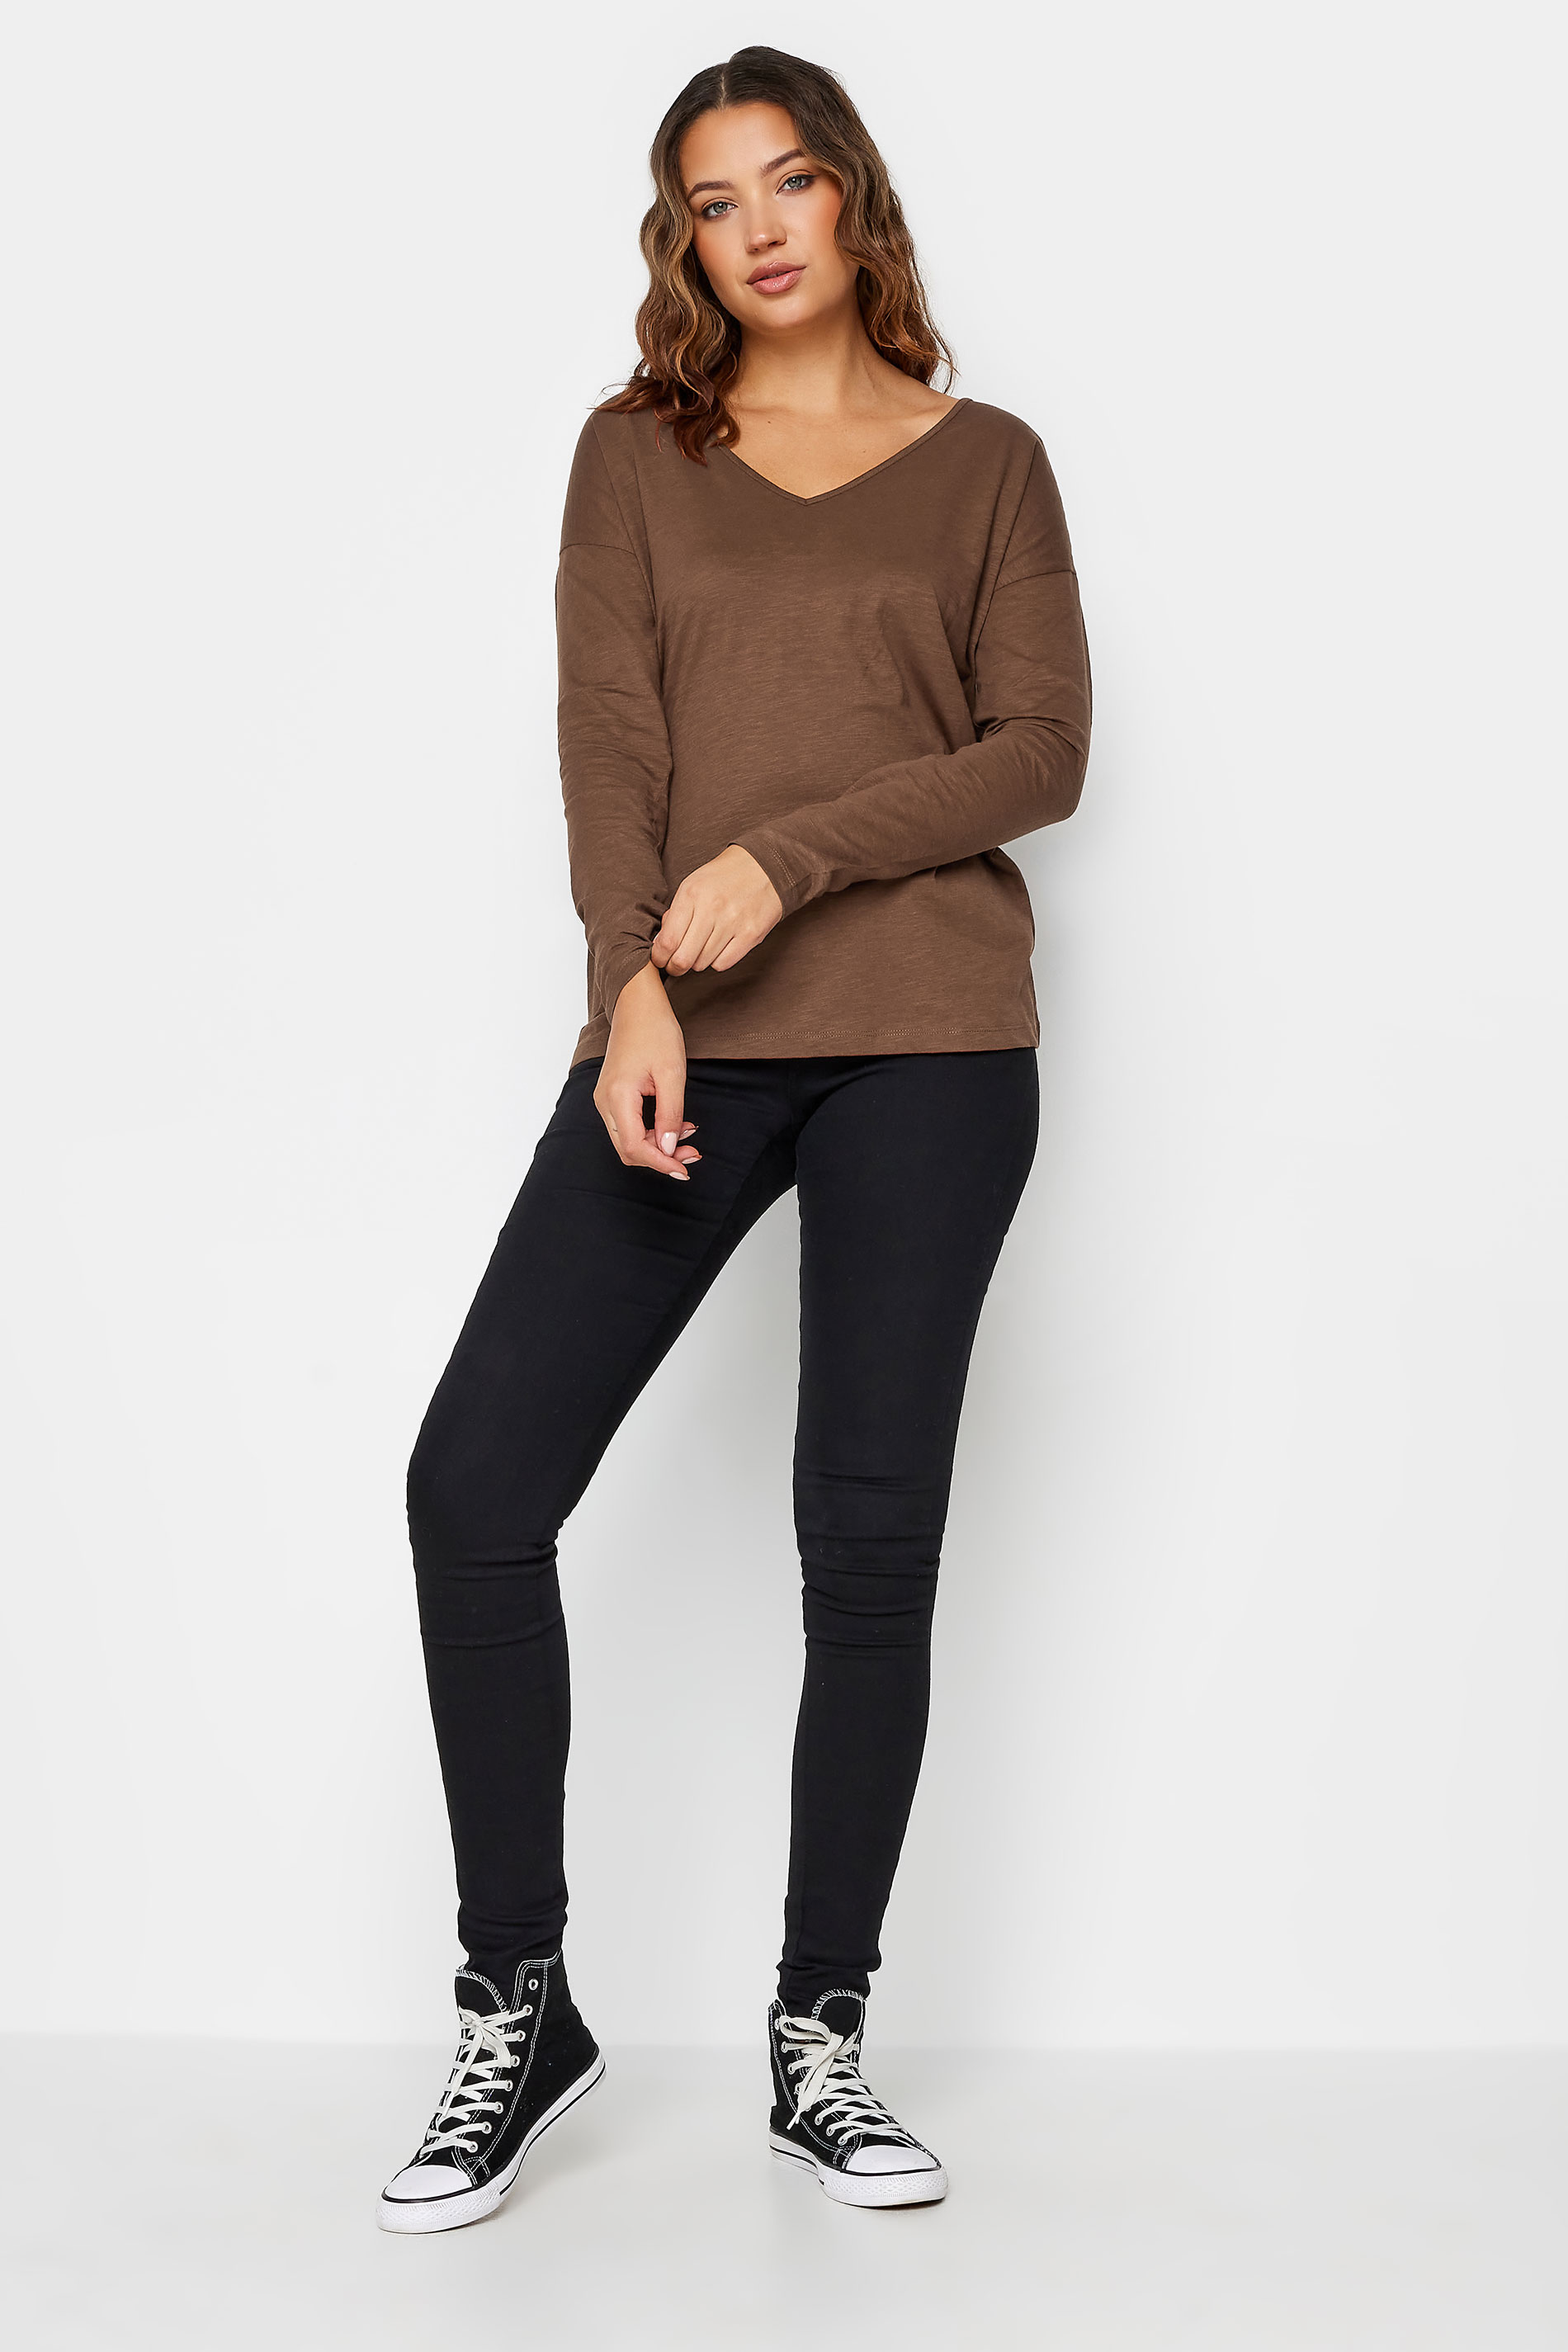 LTS Tall Brown V-Neck Long Sleeve Cotton T-Shirt | Long Tall Sally 2